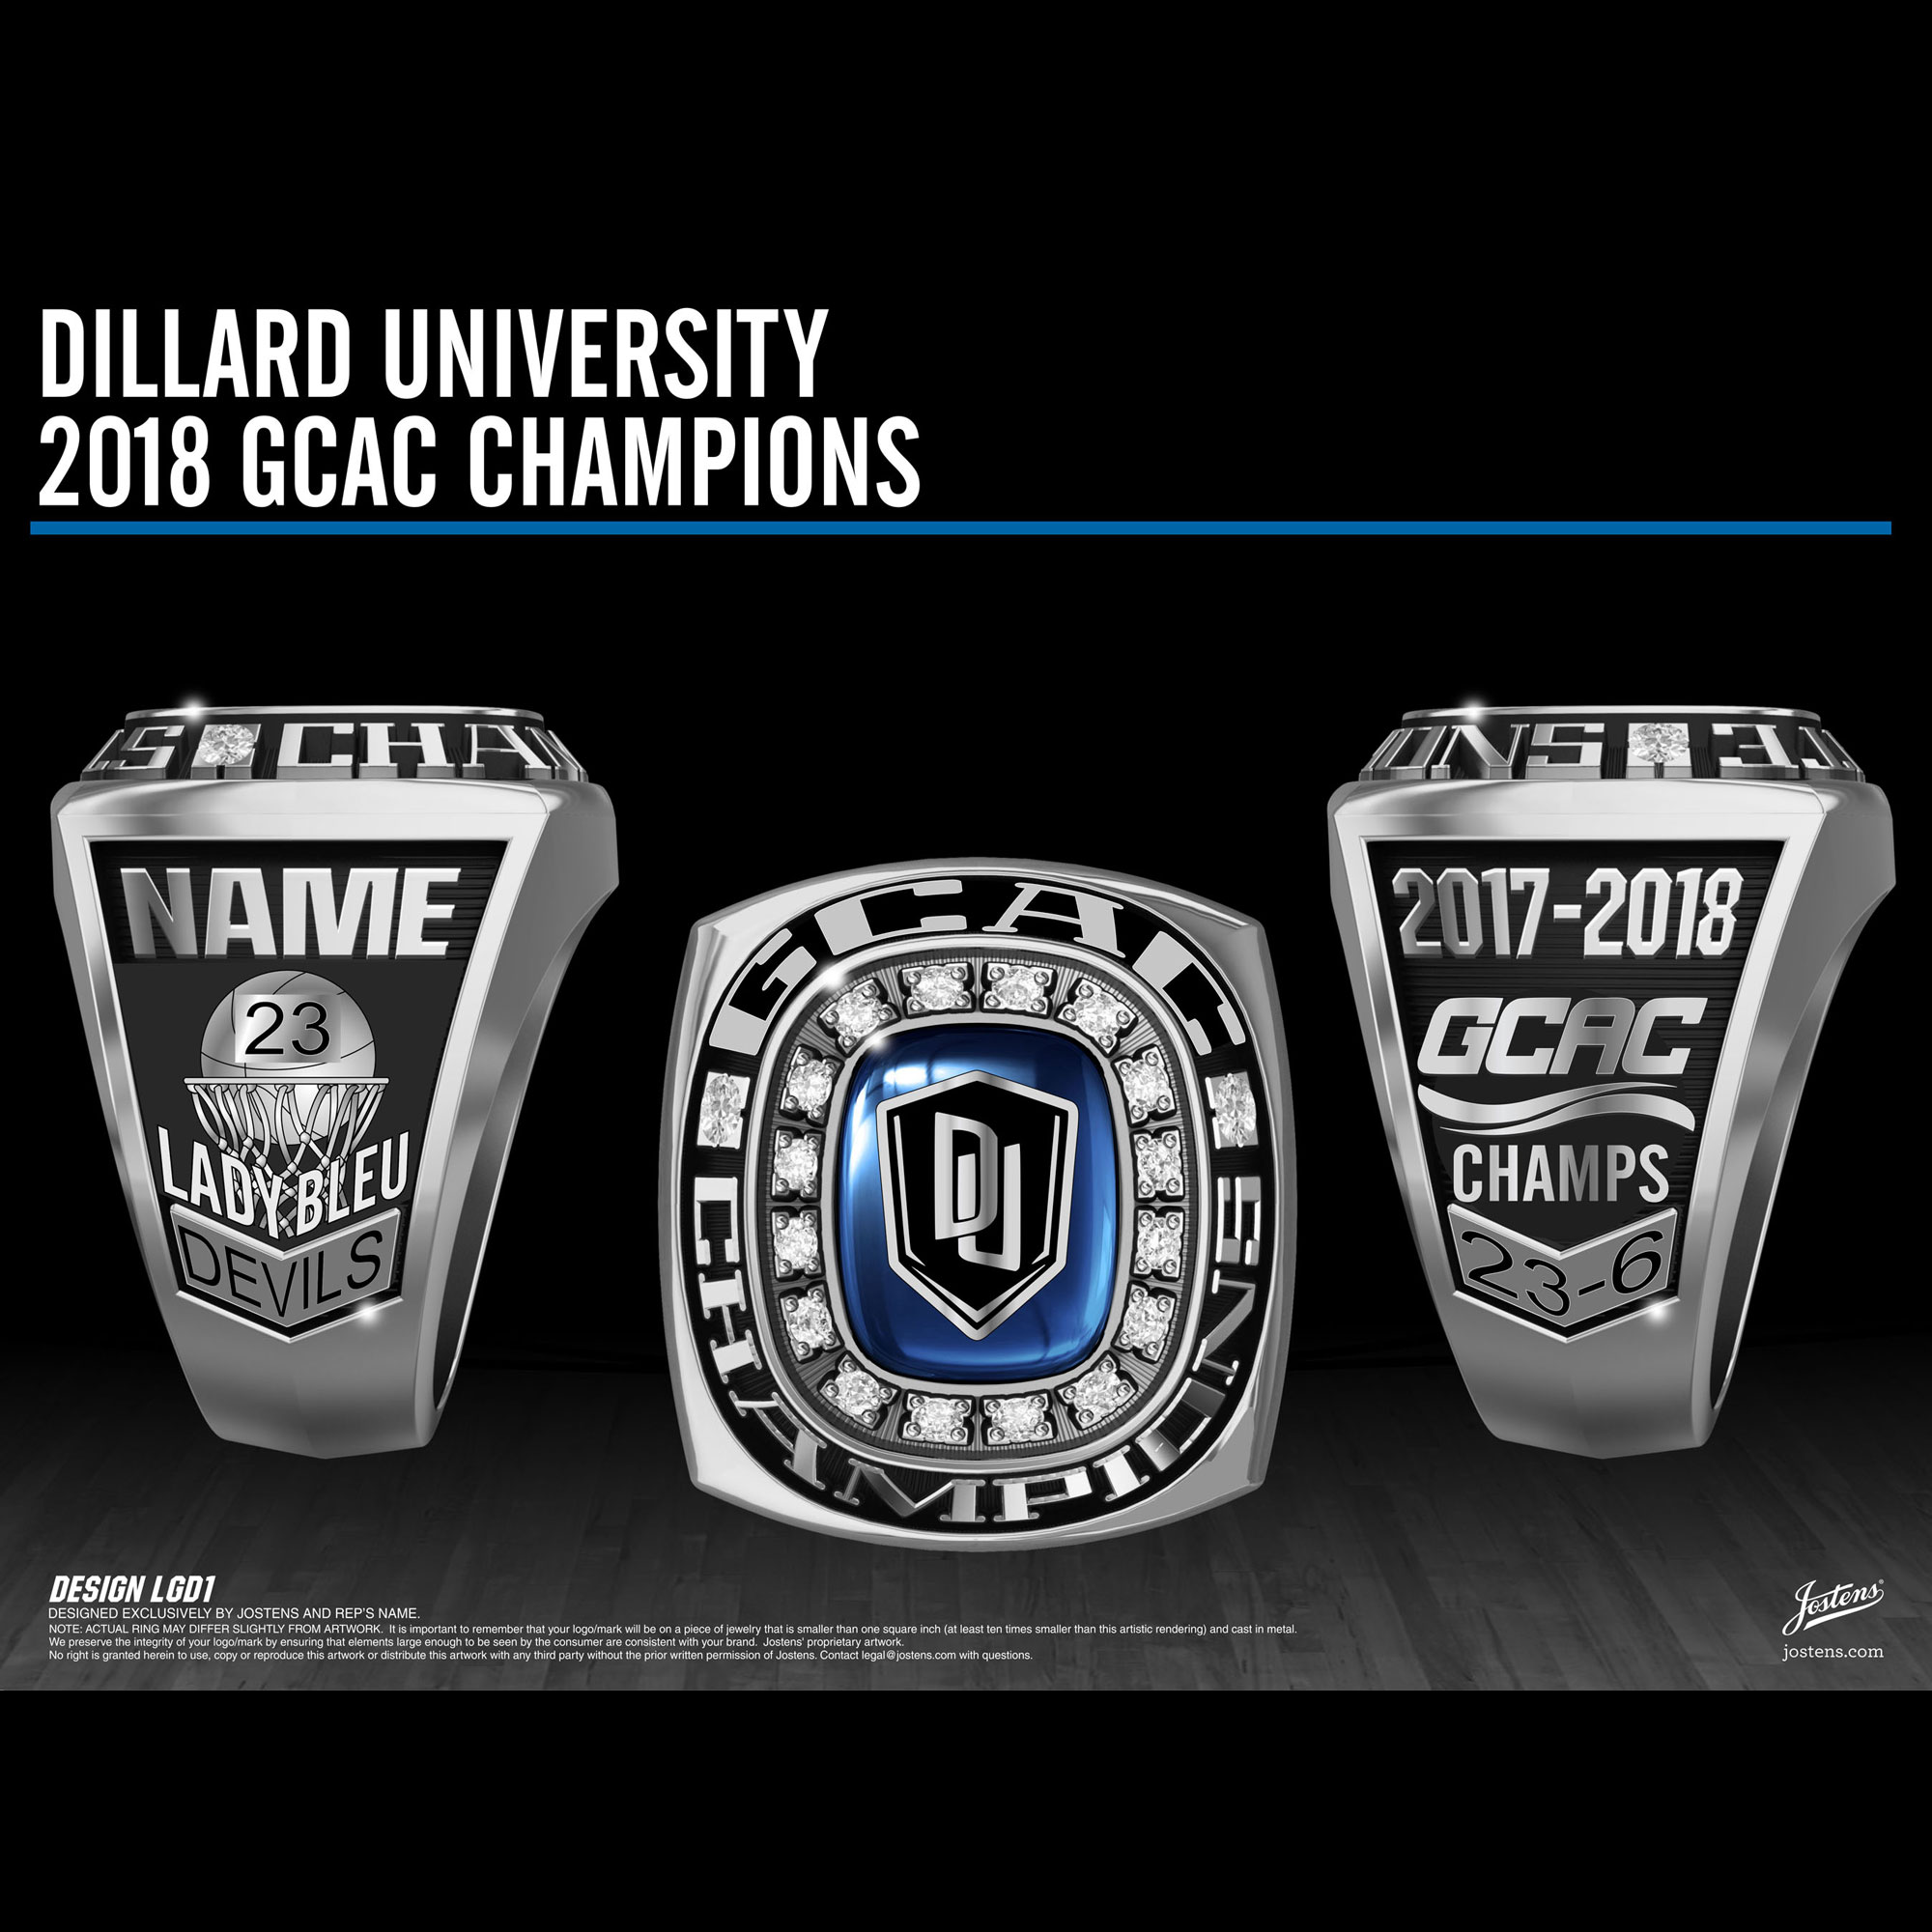 Dillard University Women's Basketball 2018 GCAC Championship Ring